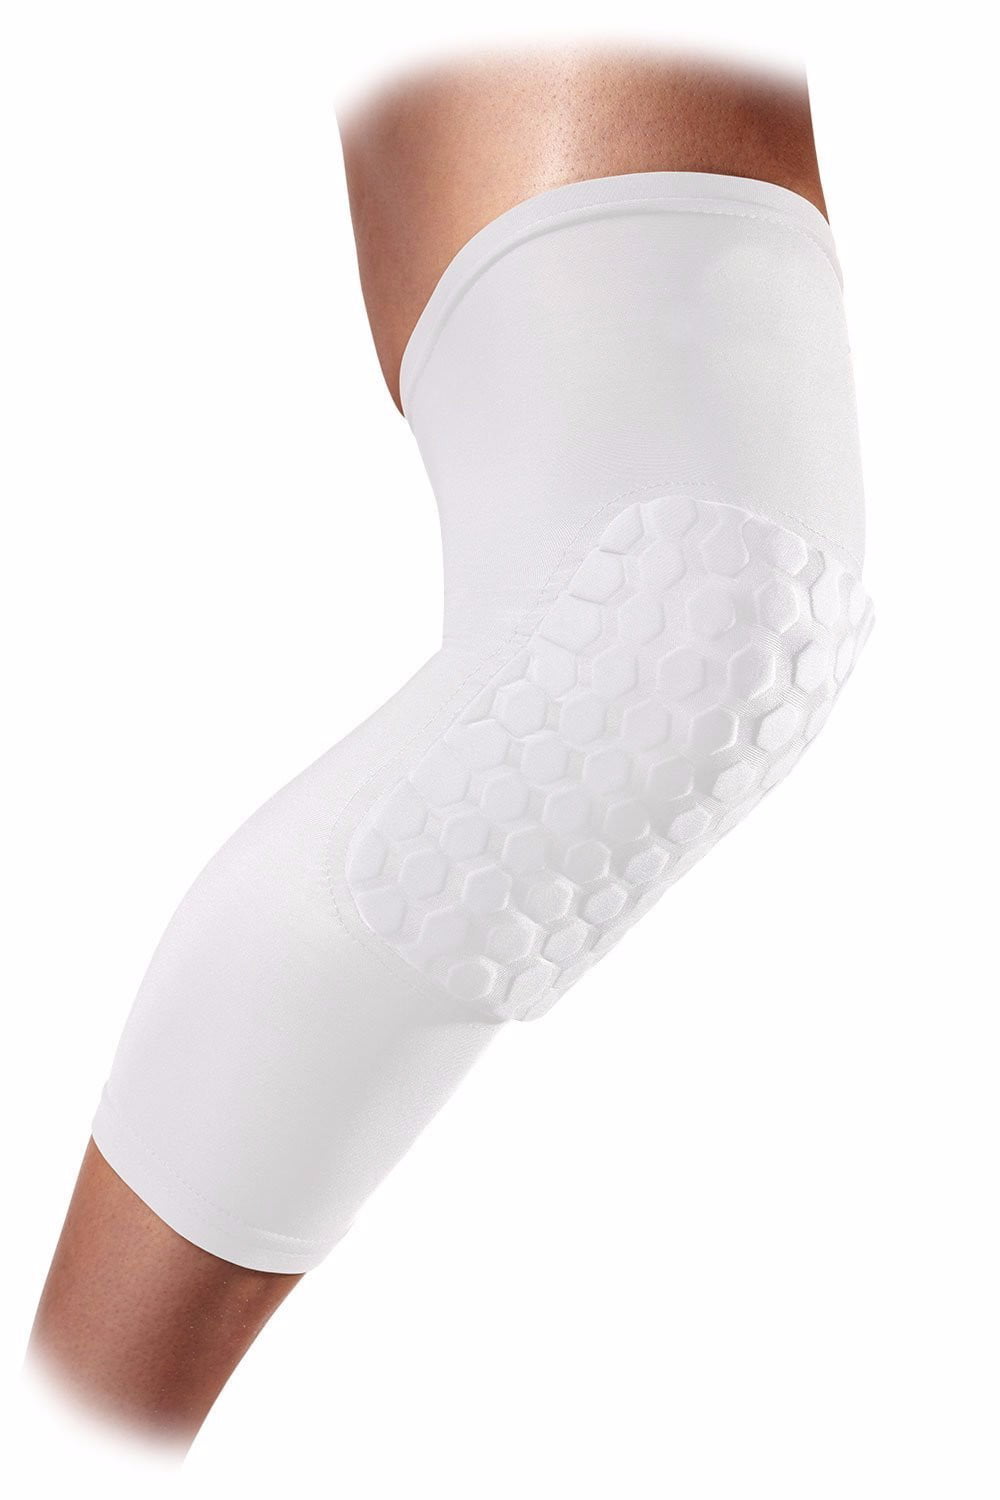 Details about   2X Adult Sport Basketball Honeycomb Pad Crashproof Knee Leg Sleeve Brace Fashion 